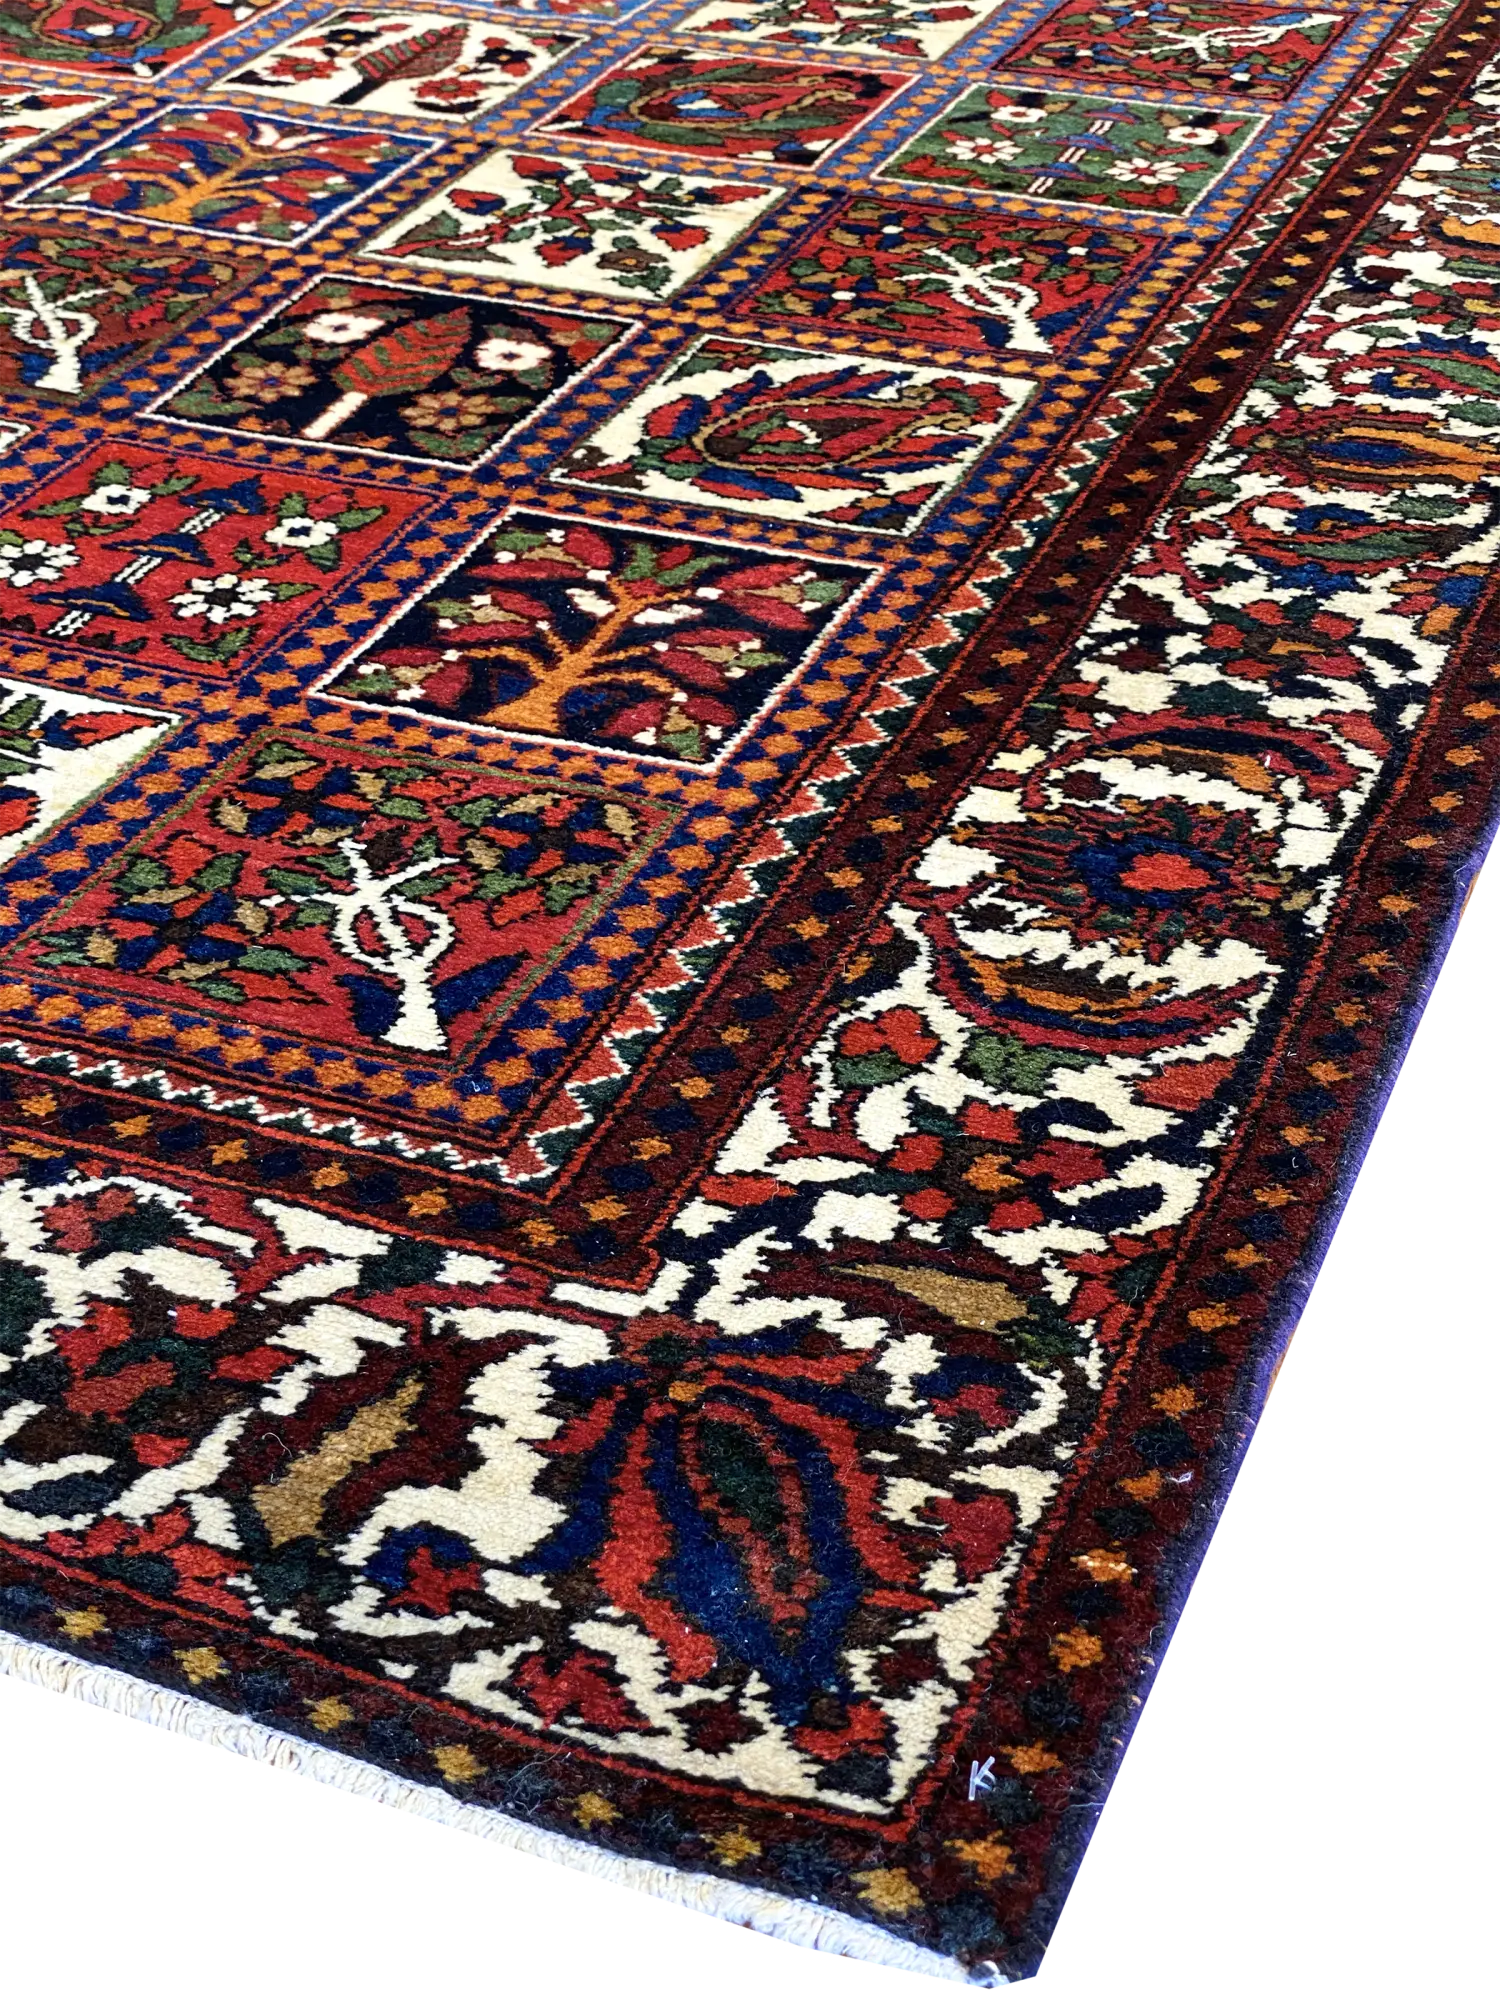 Antique Persian Bakhtiari 4' 8" x 6' 10" Handmade Wool Area Rug - Shabahang Royal Carpet